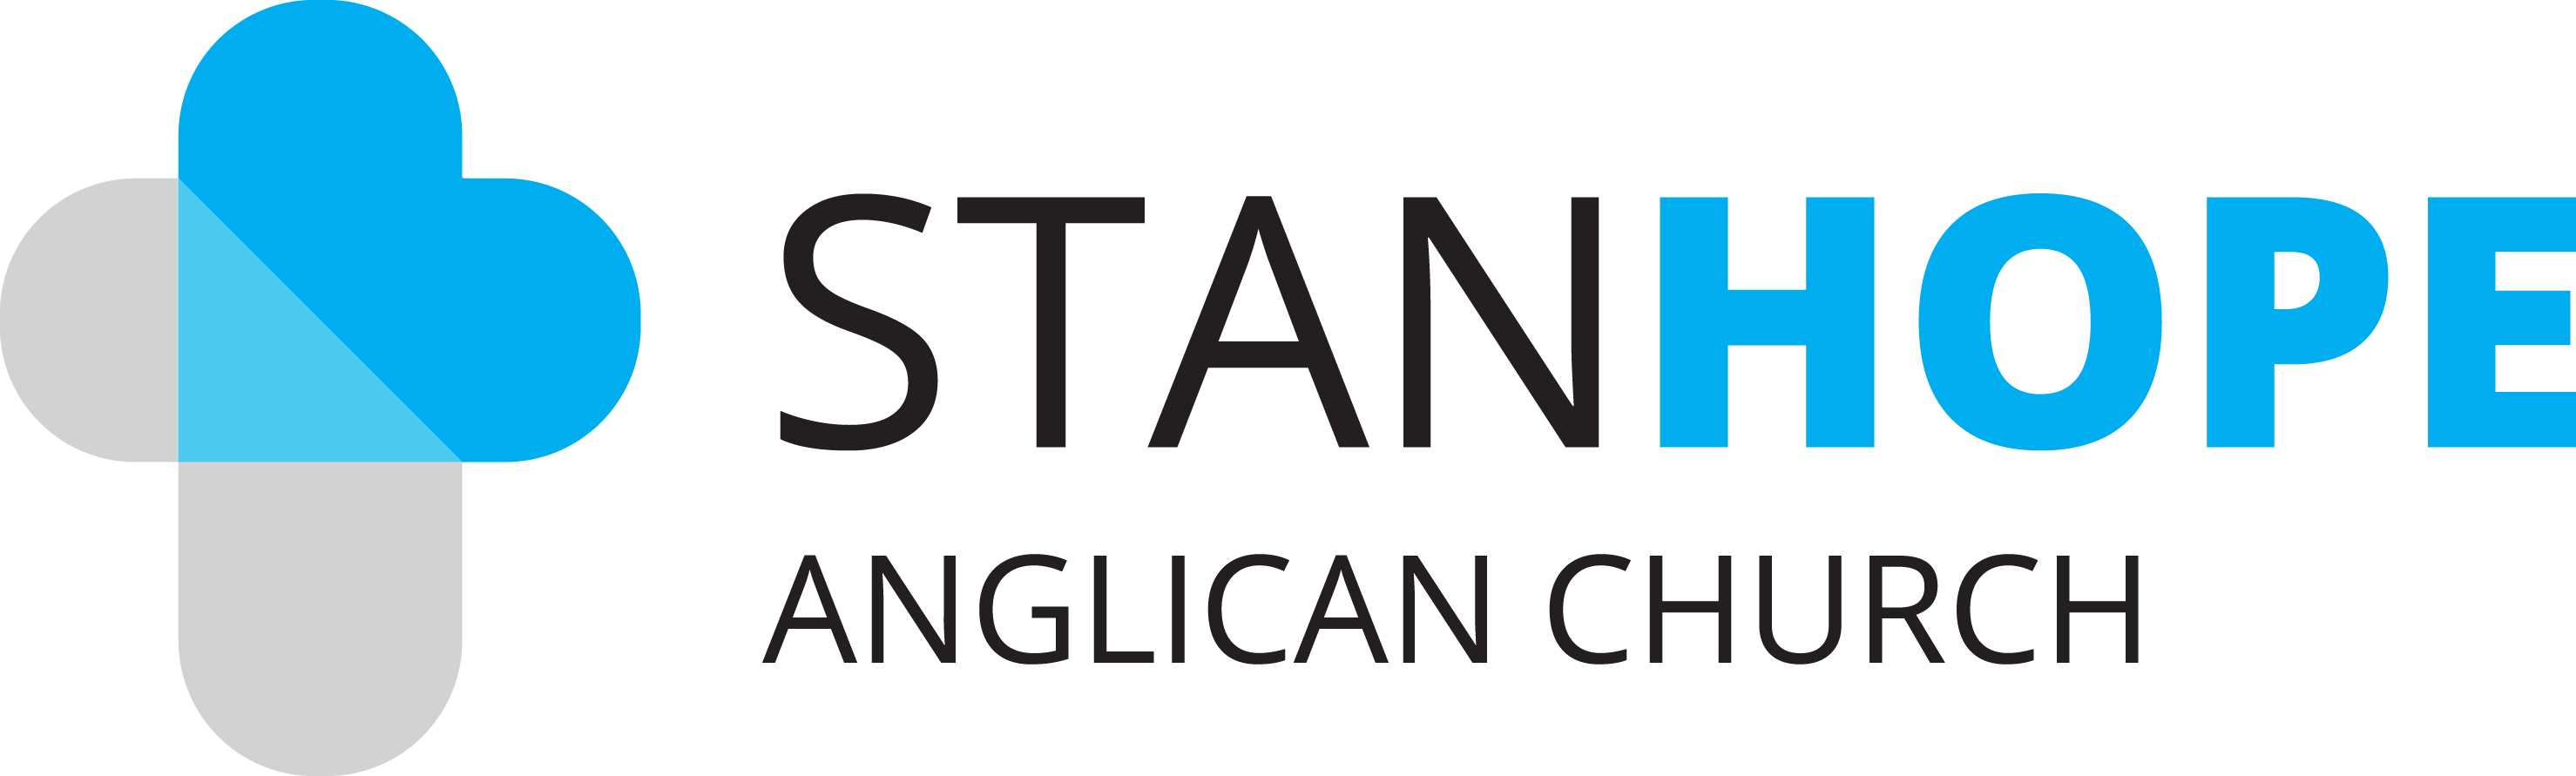 Stanhope Anglican Church